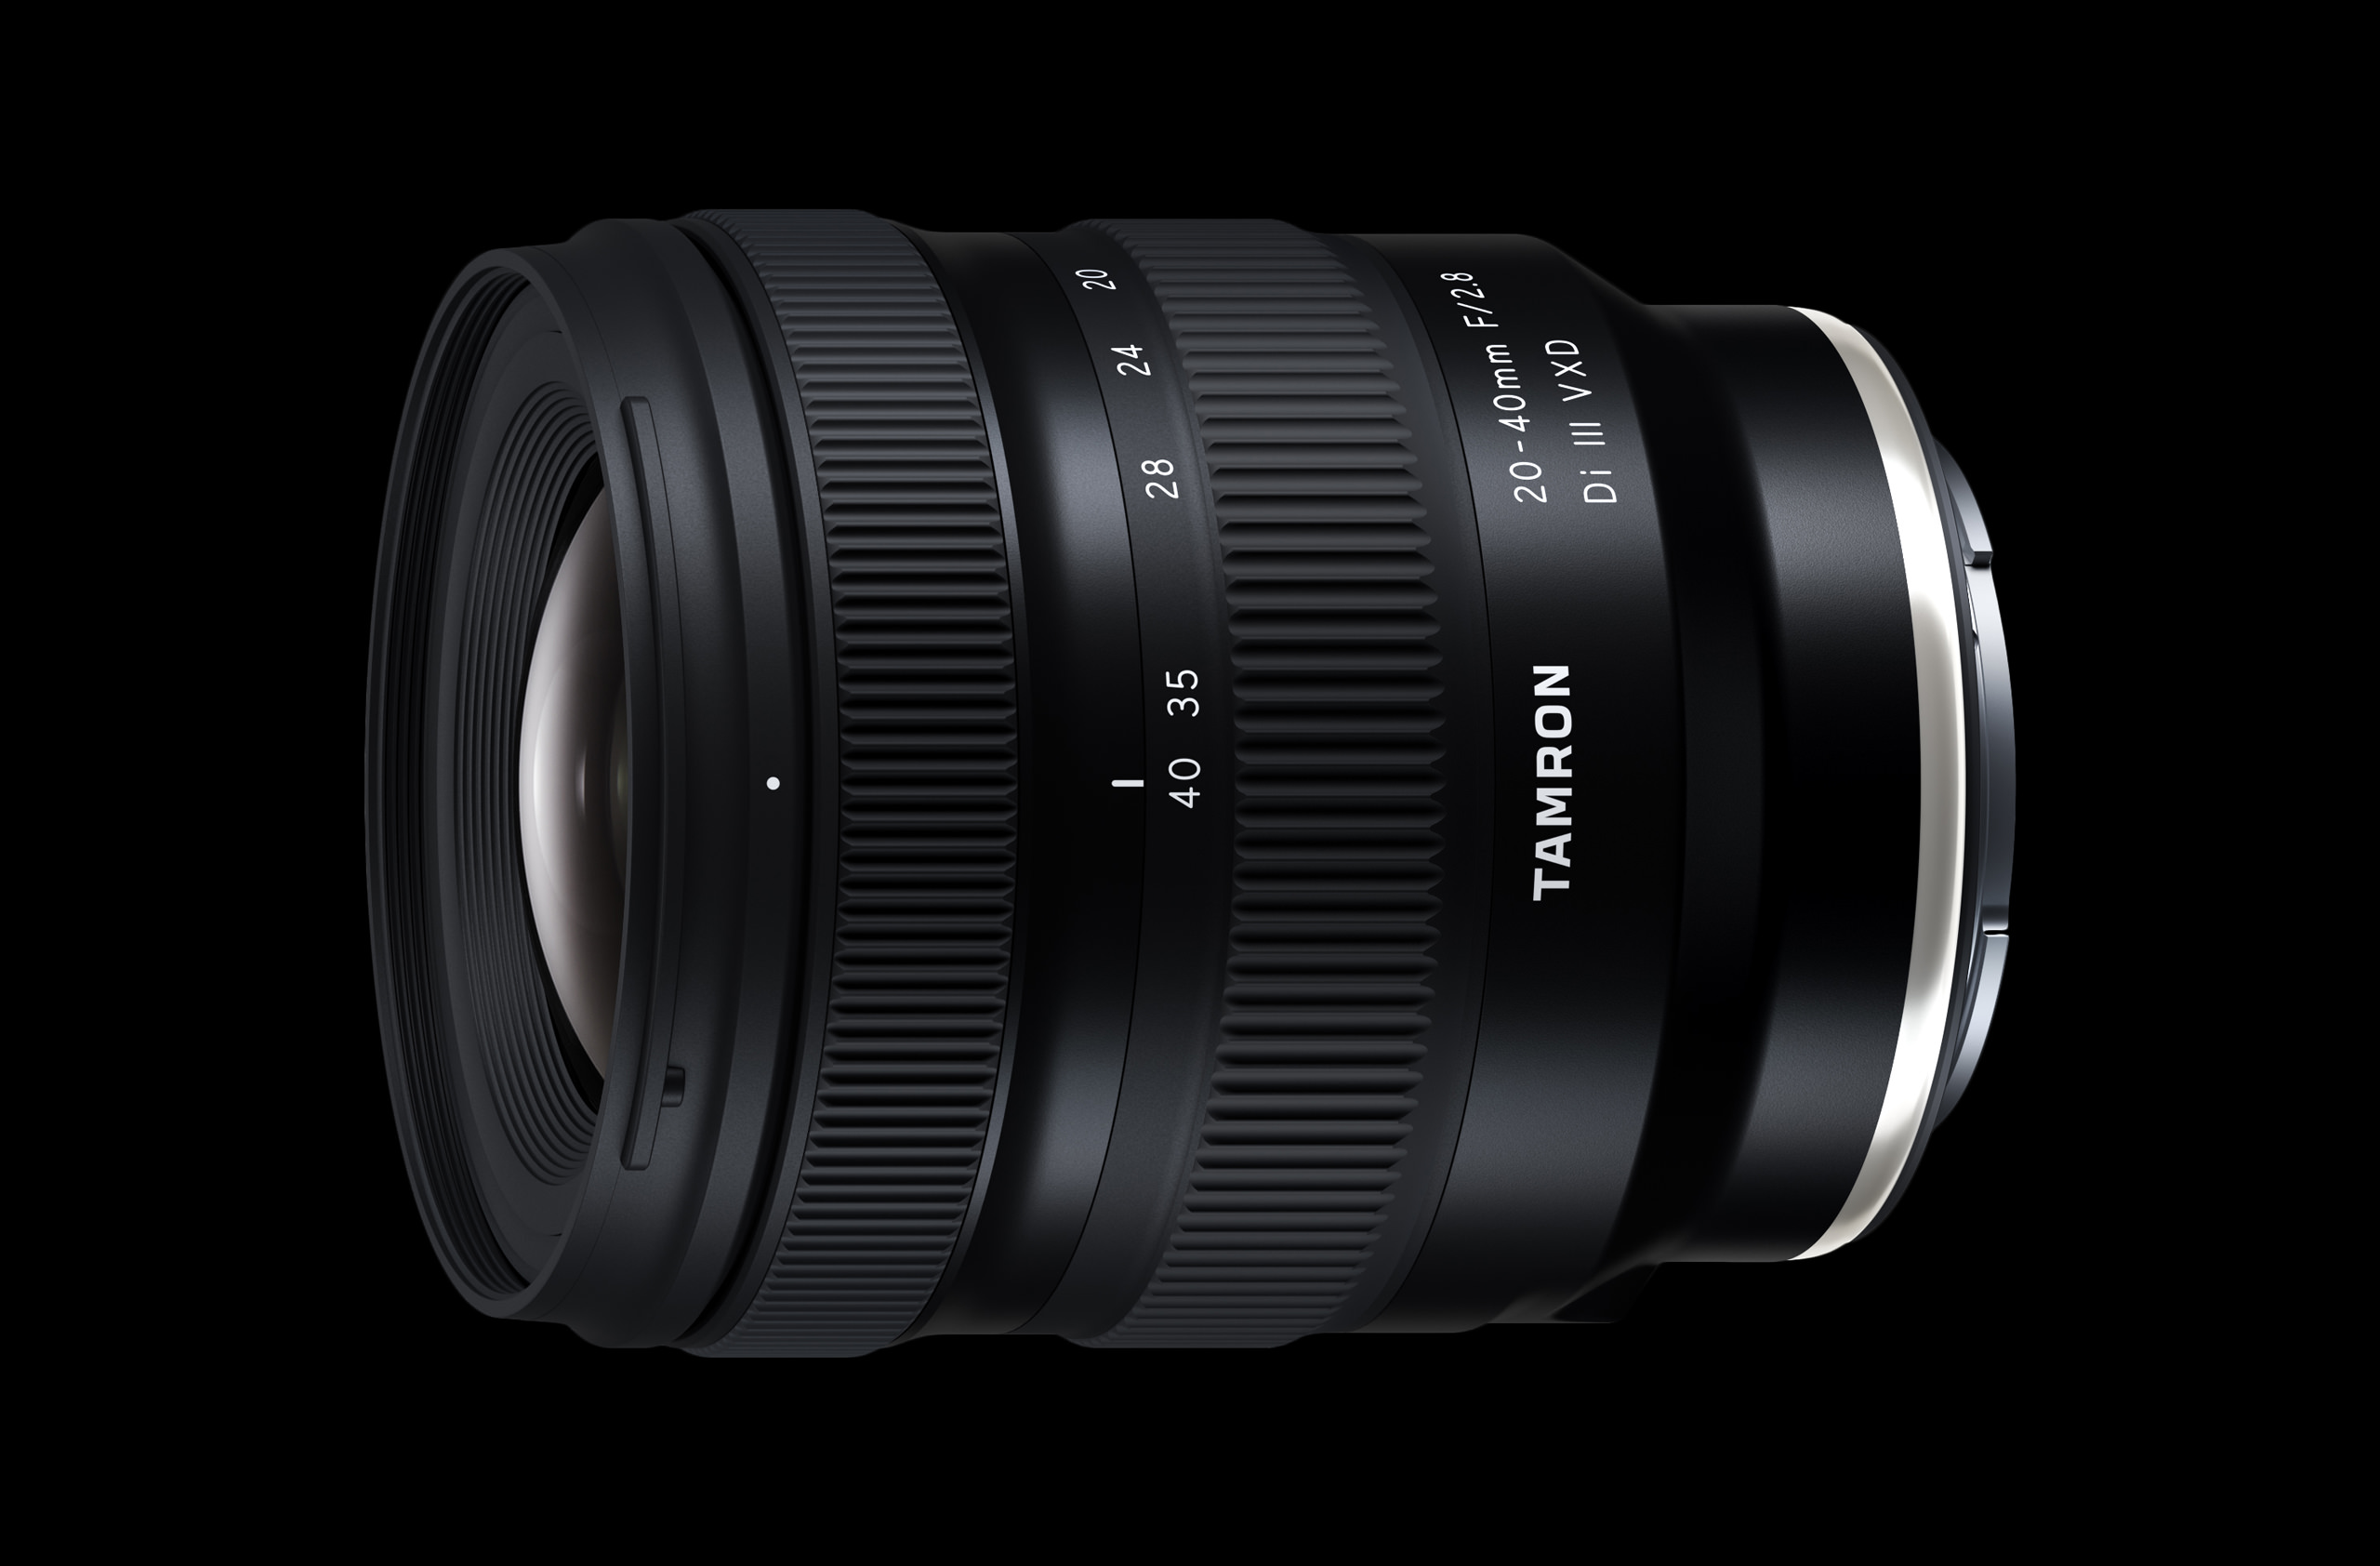 Tamron Announces the 20-40mm f/2.8 Di II VxD Zoom Lens for Sony E